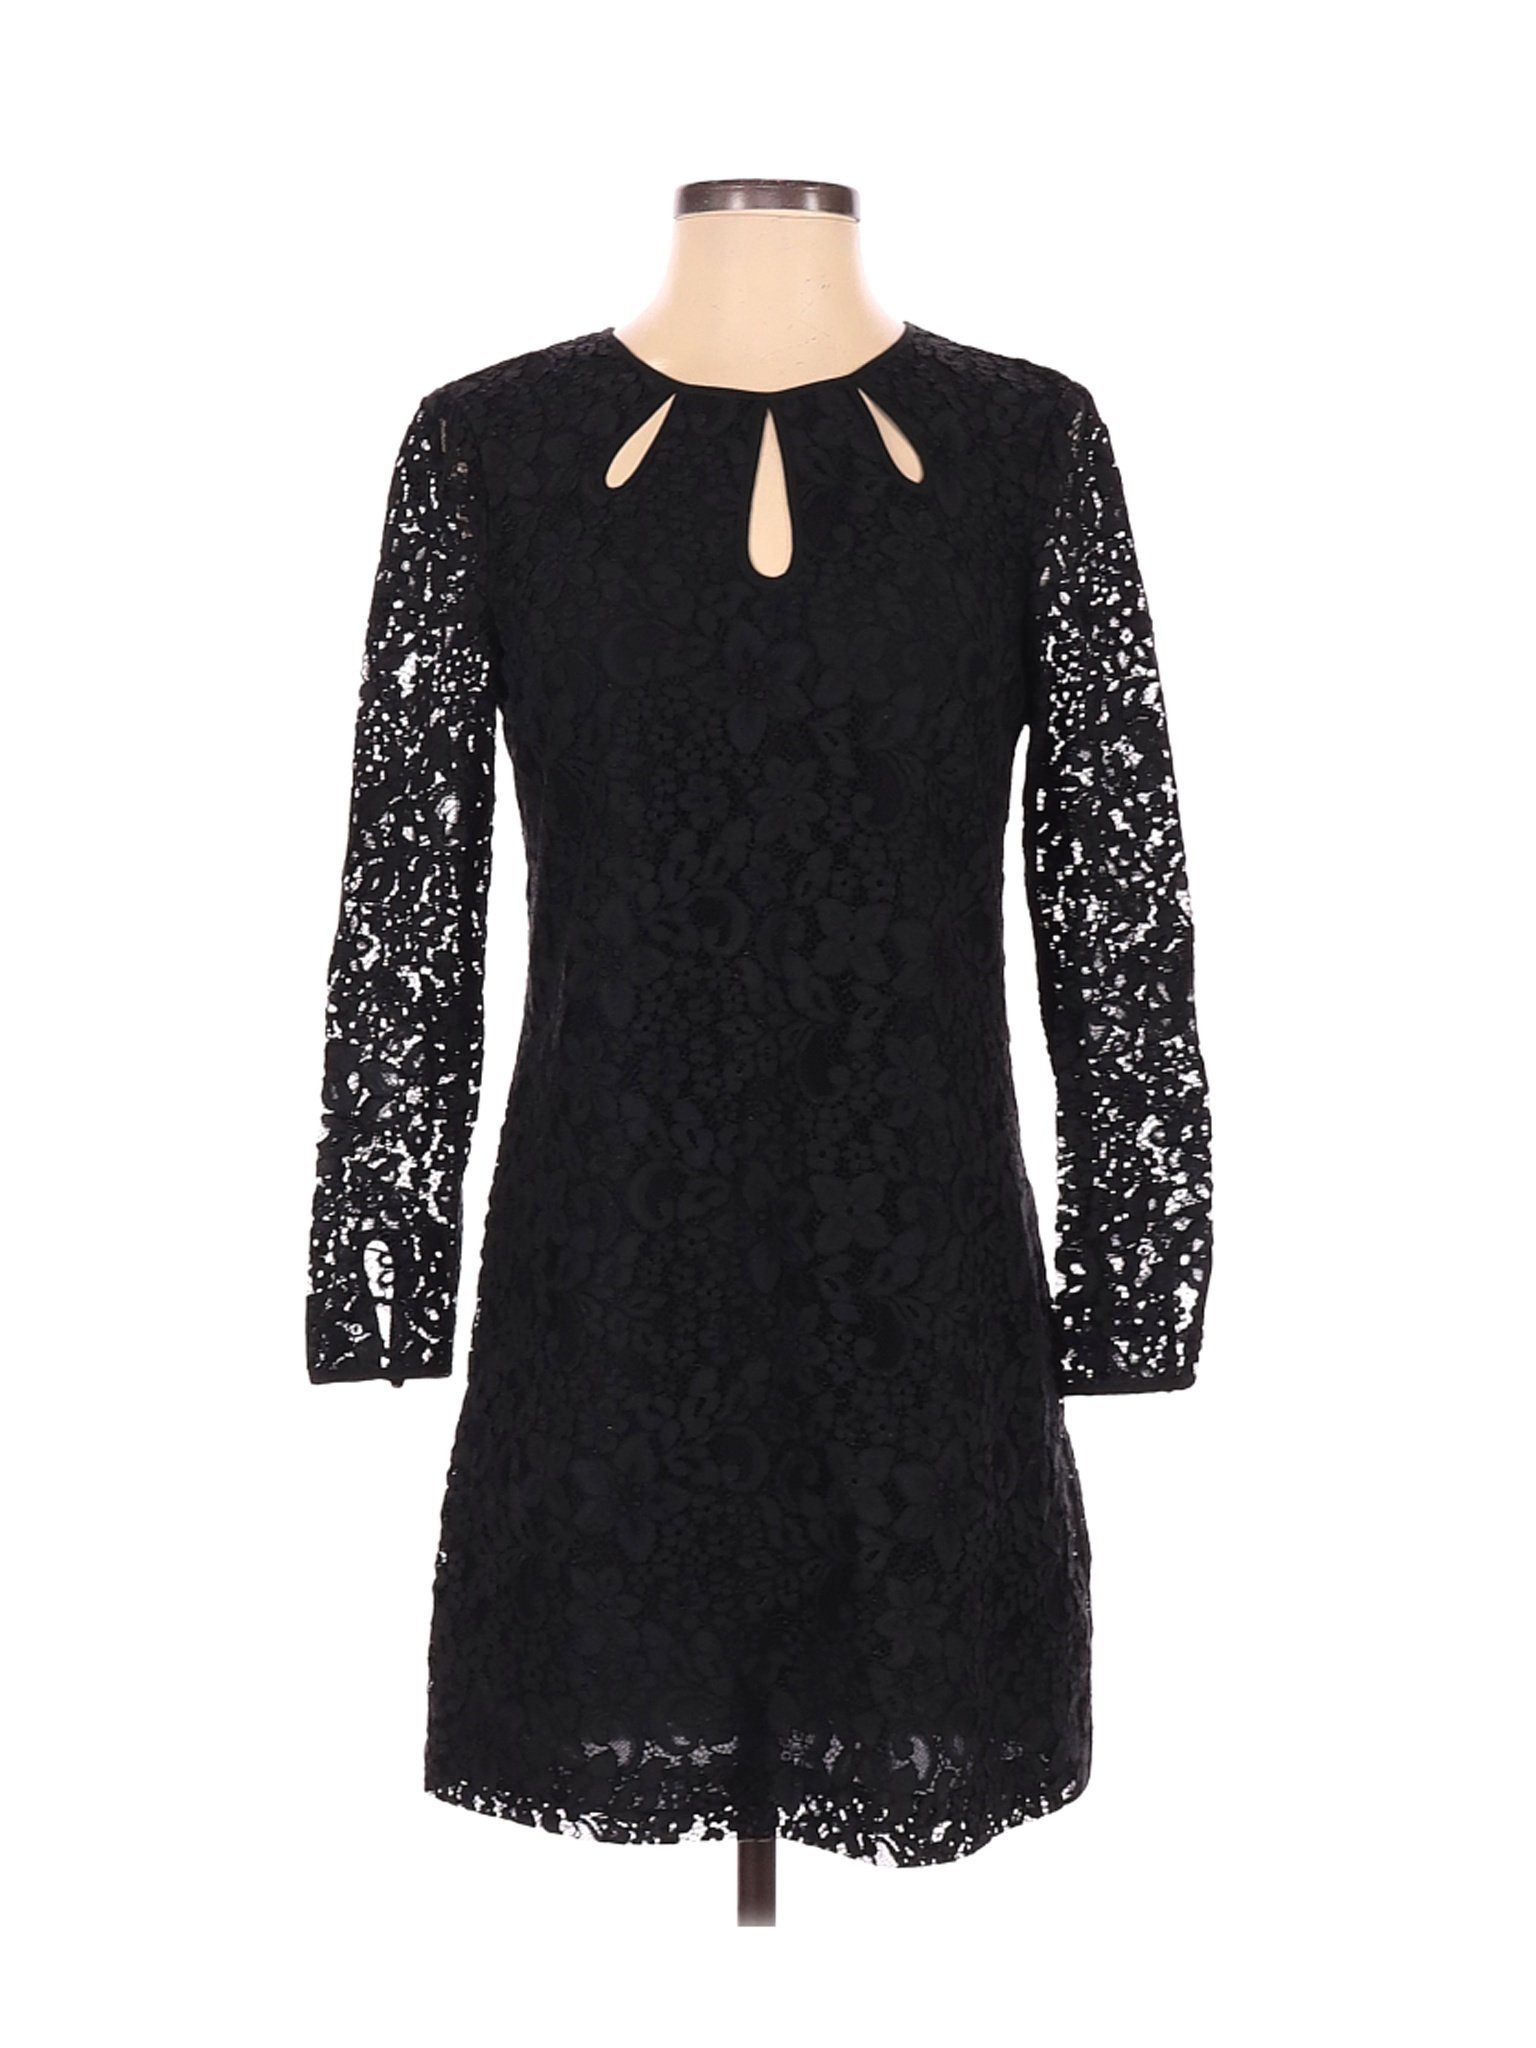 Juicy Couture Women Black Casual Dress 2 | eBay